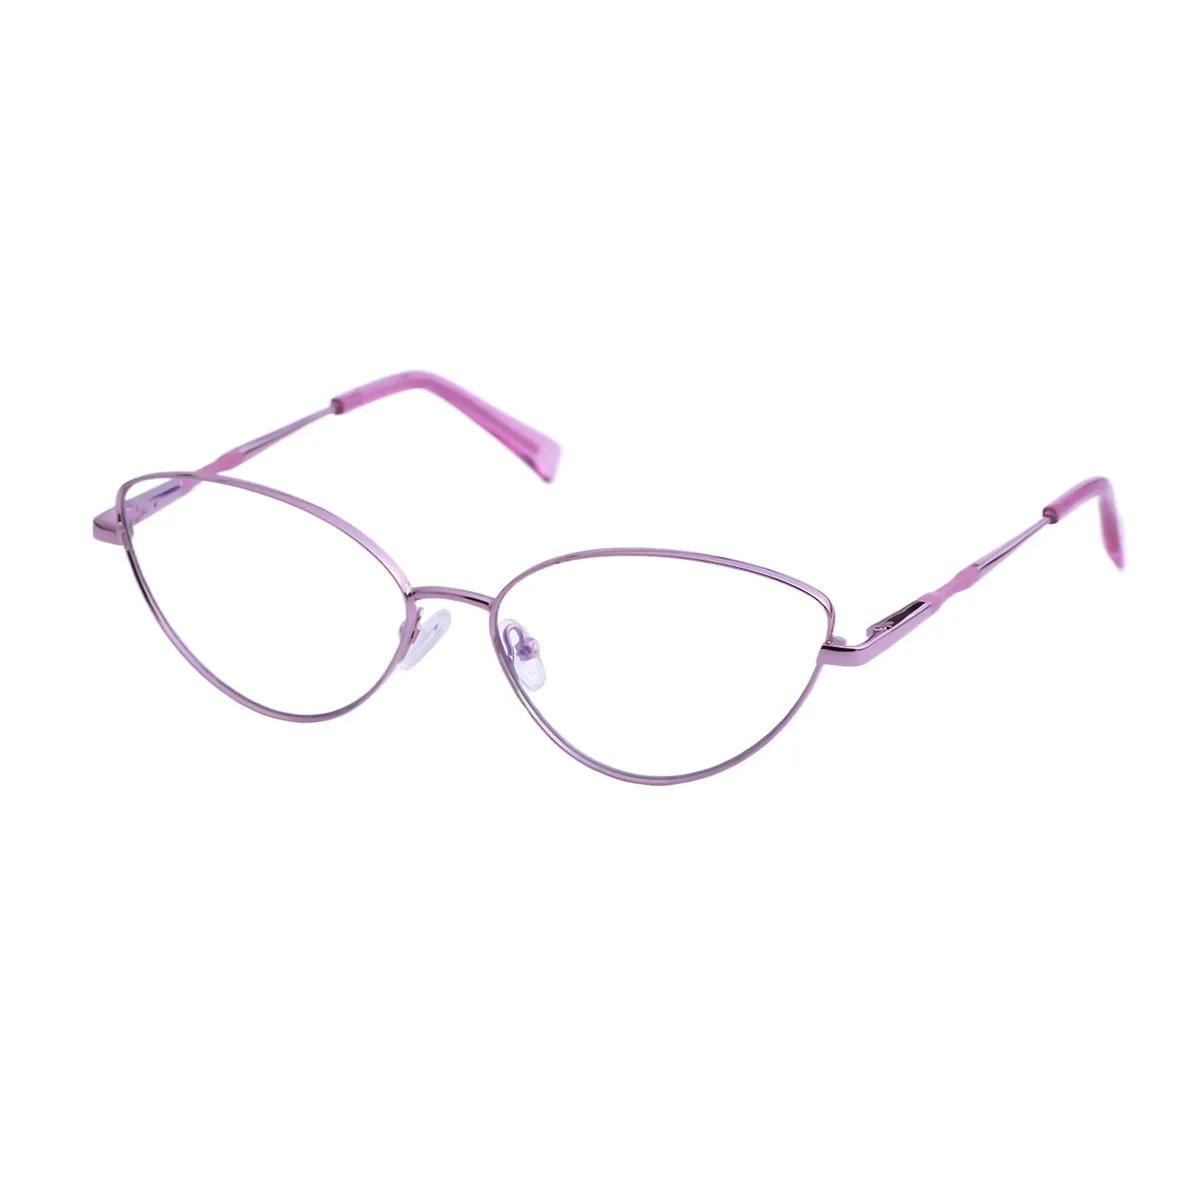 Selena - Oval Pink Glasses for Women